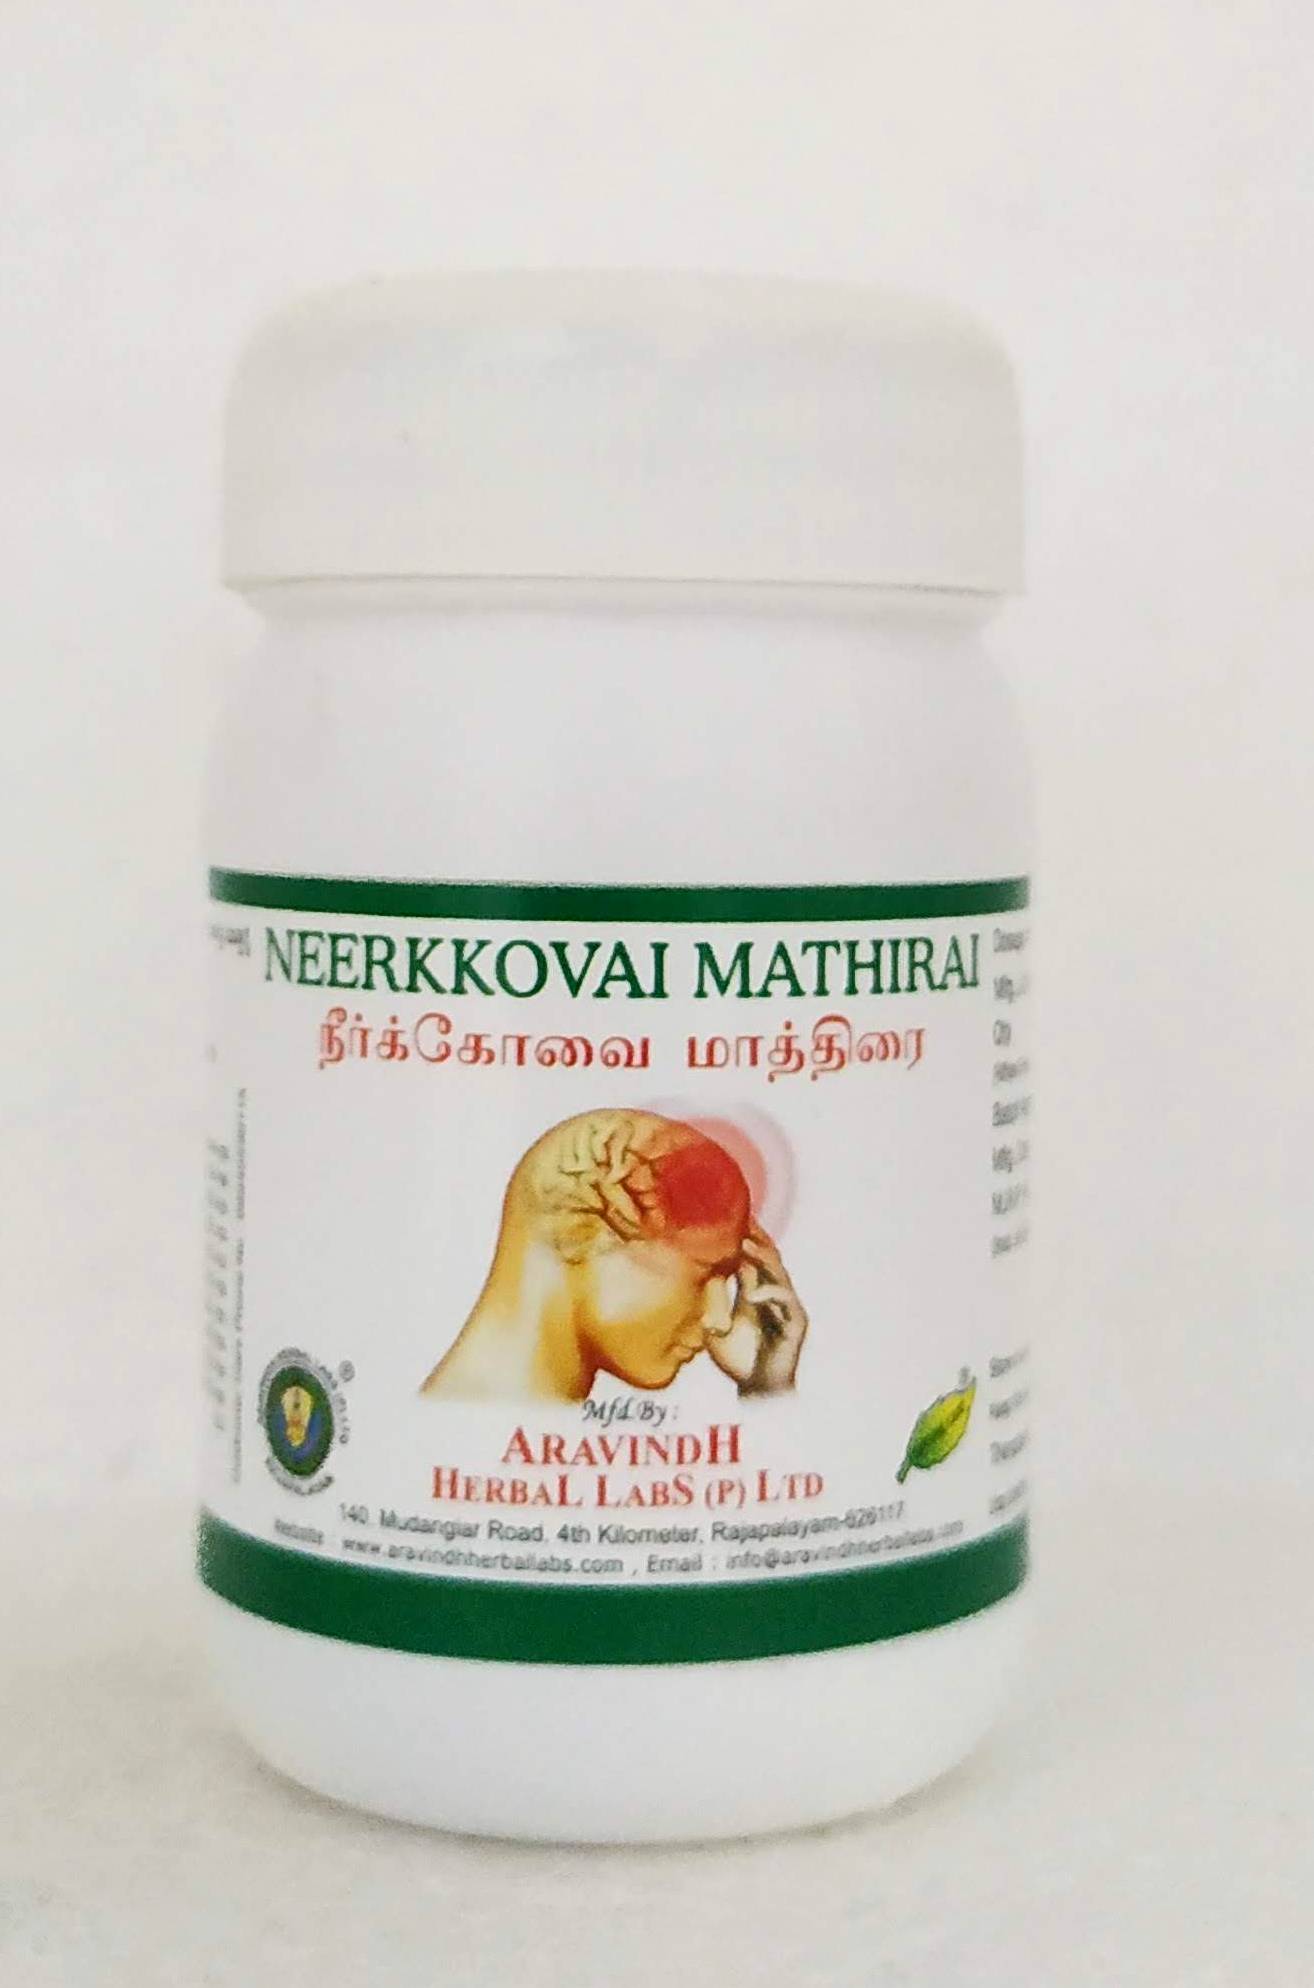 Shop Neerkovai mathirai - 25gm at price 40.00 from Aravindh Online - Ayush Care